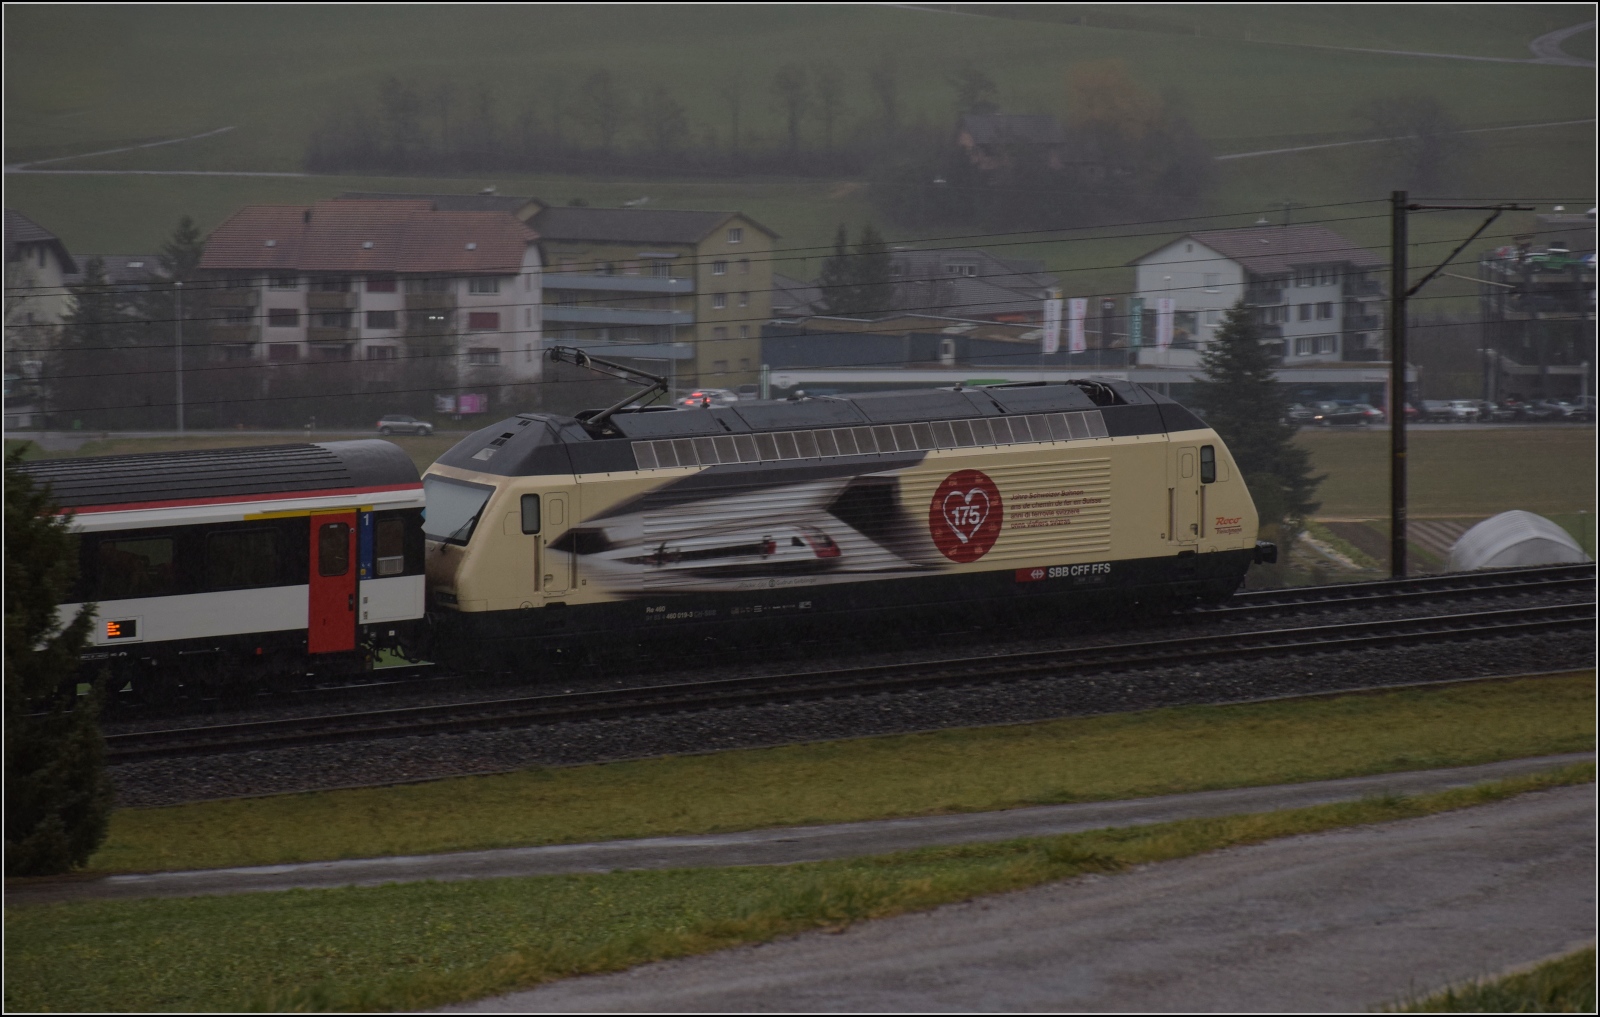 Dunkle Regenschlacht an Silvester.

Re 460 019 mit der Bahnjubiläumswerbung bei Frick. Dezember 2023.